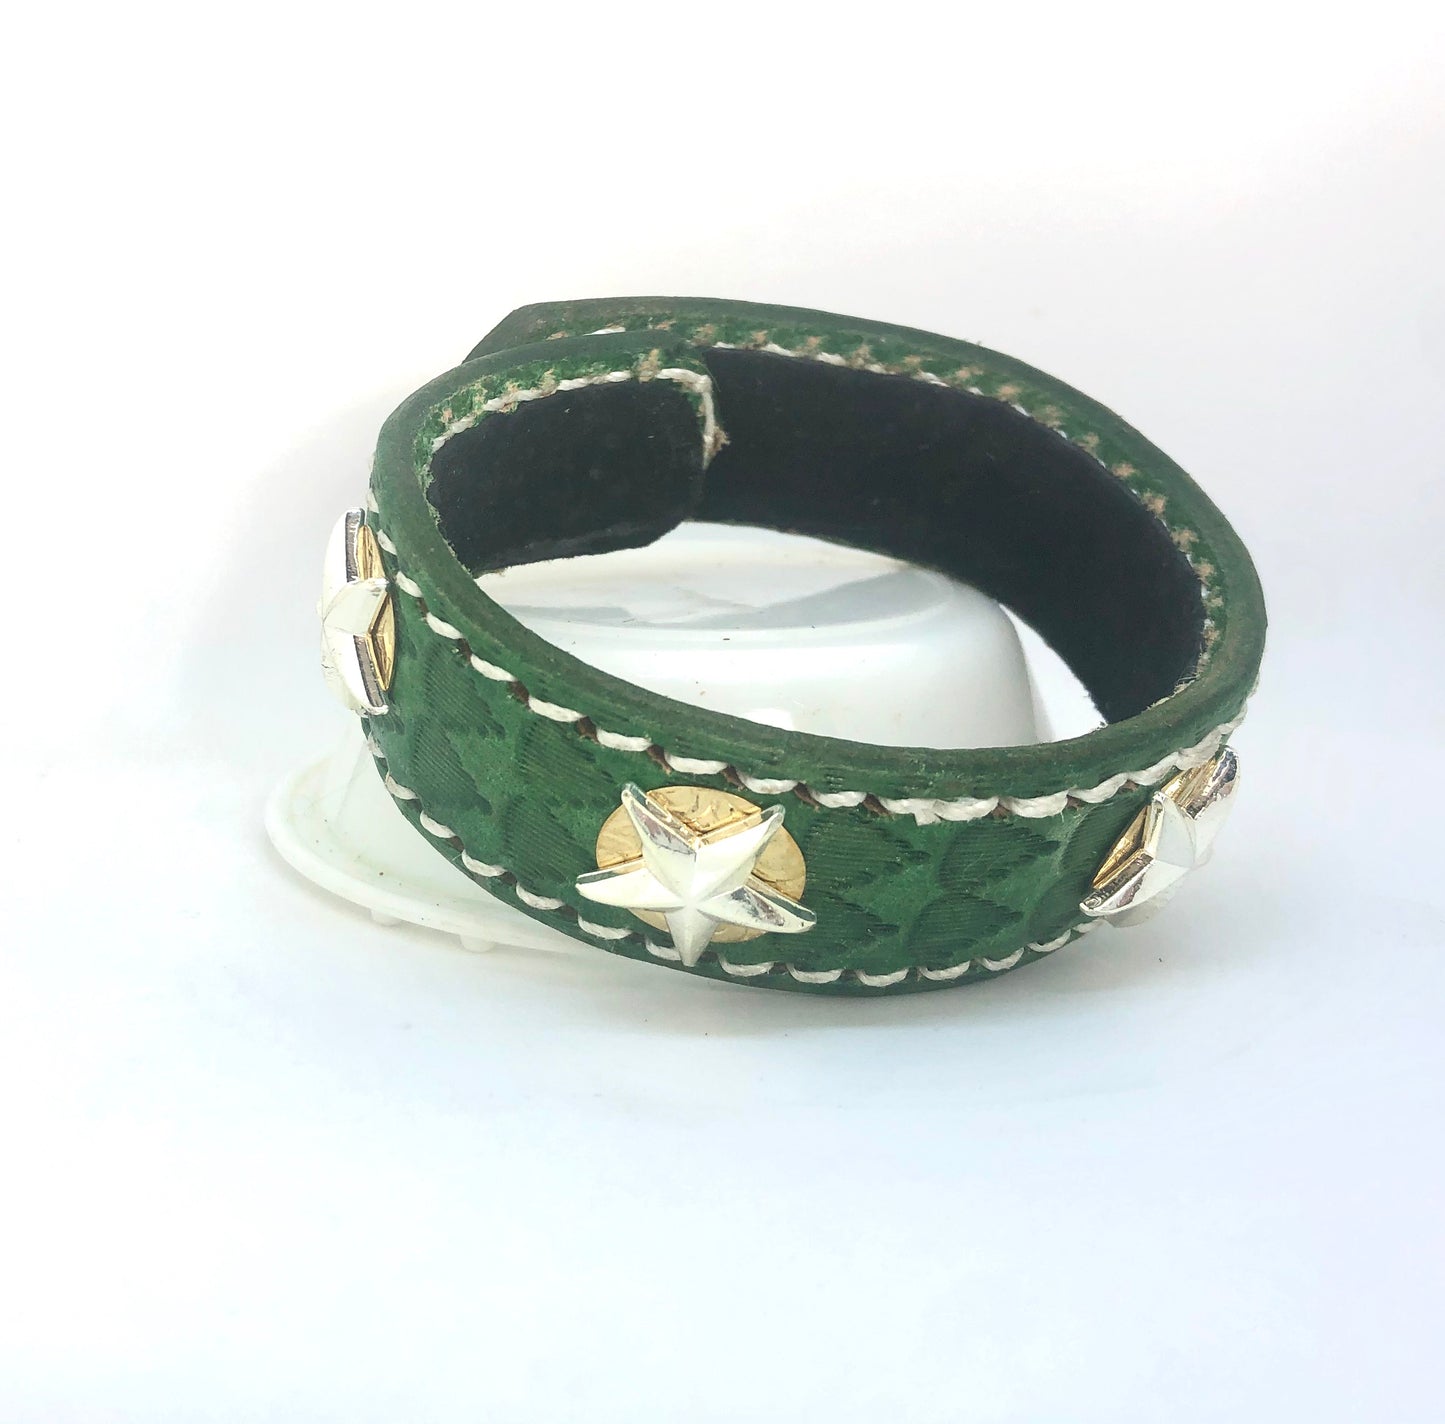 The Aristocrat Light Green Leather Bracelet top view